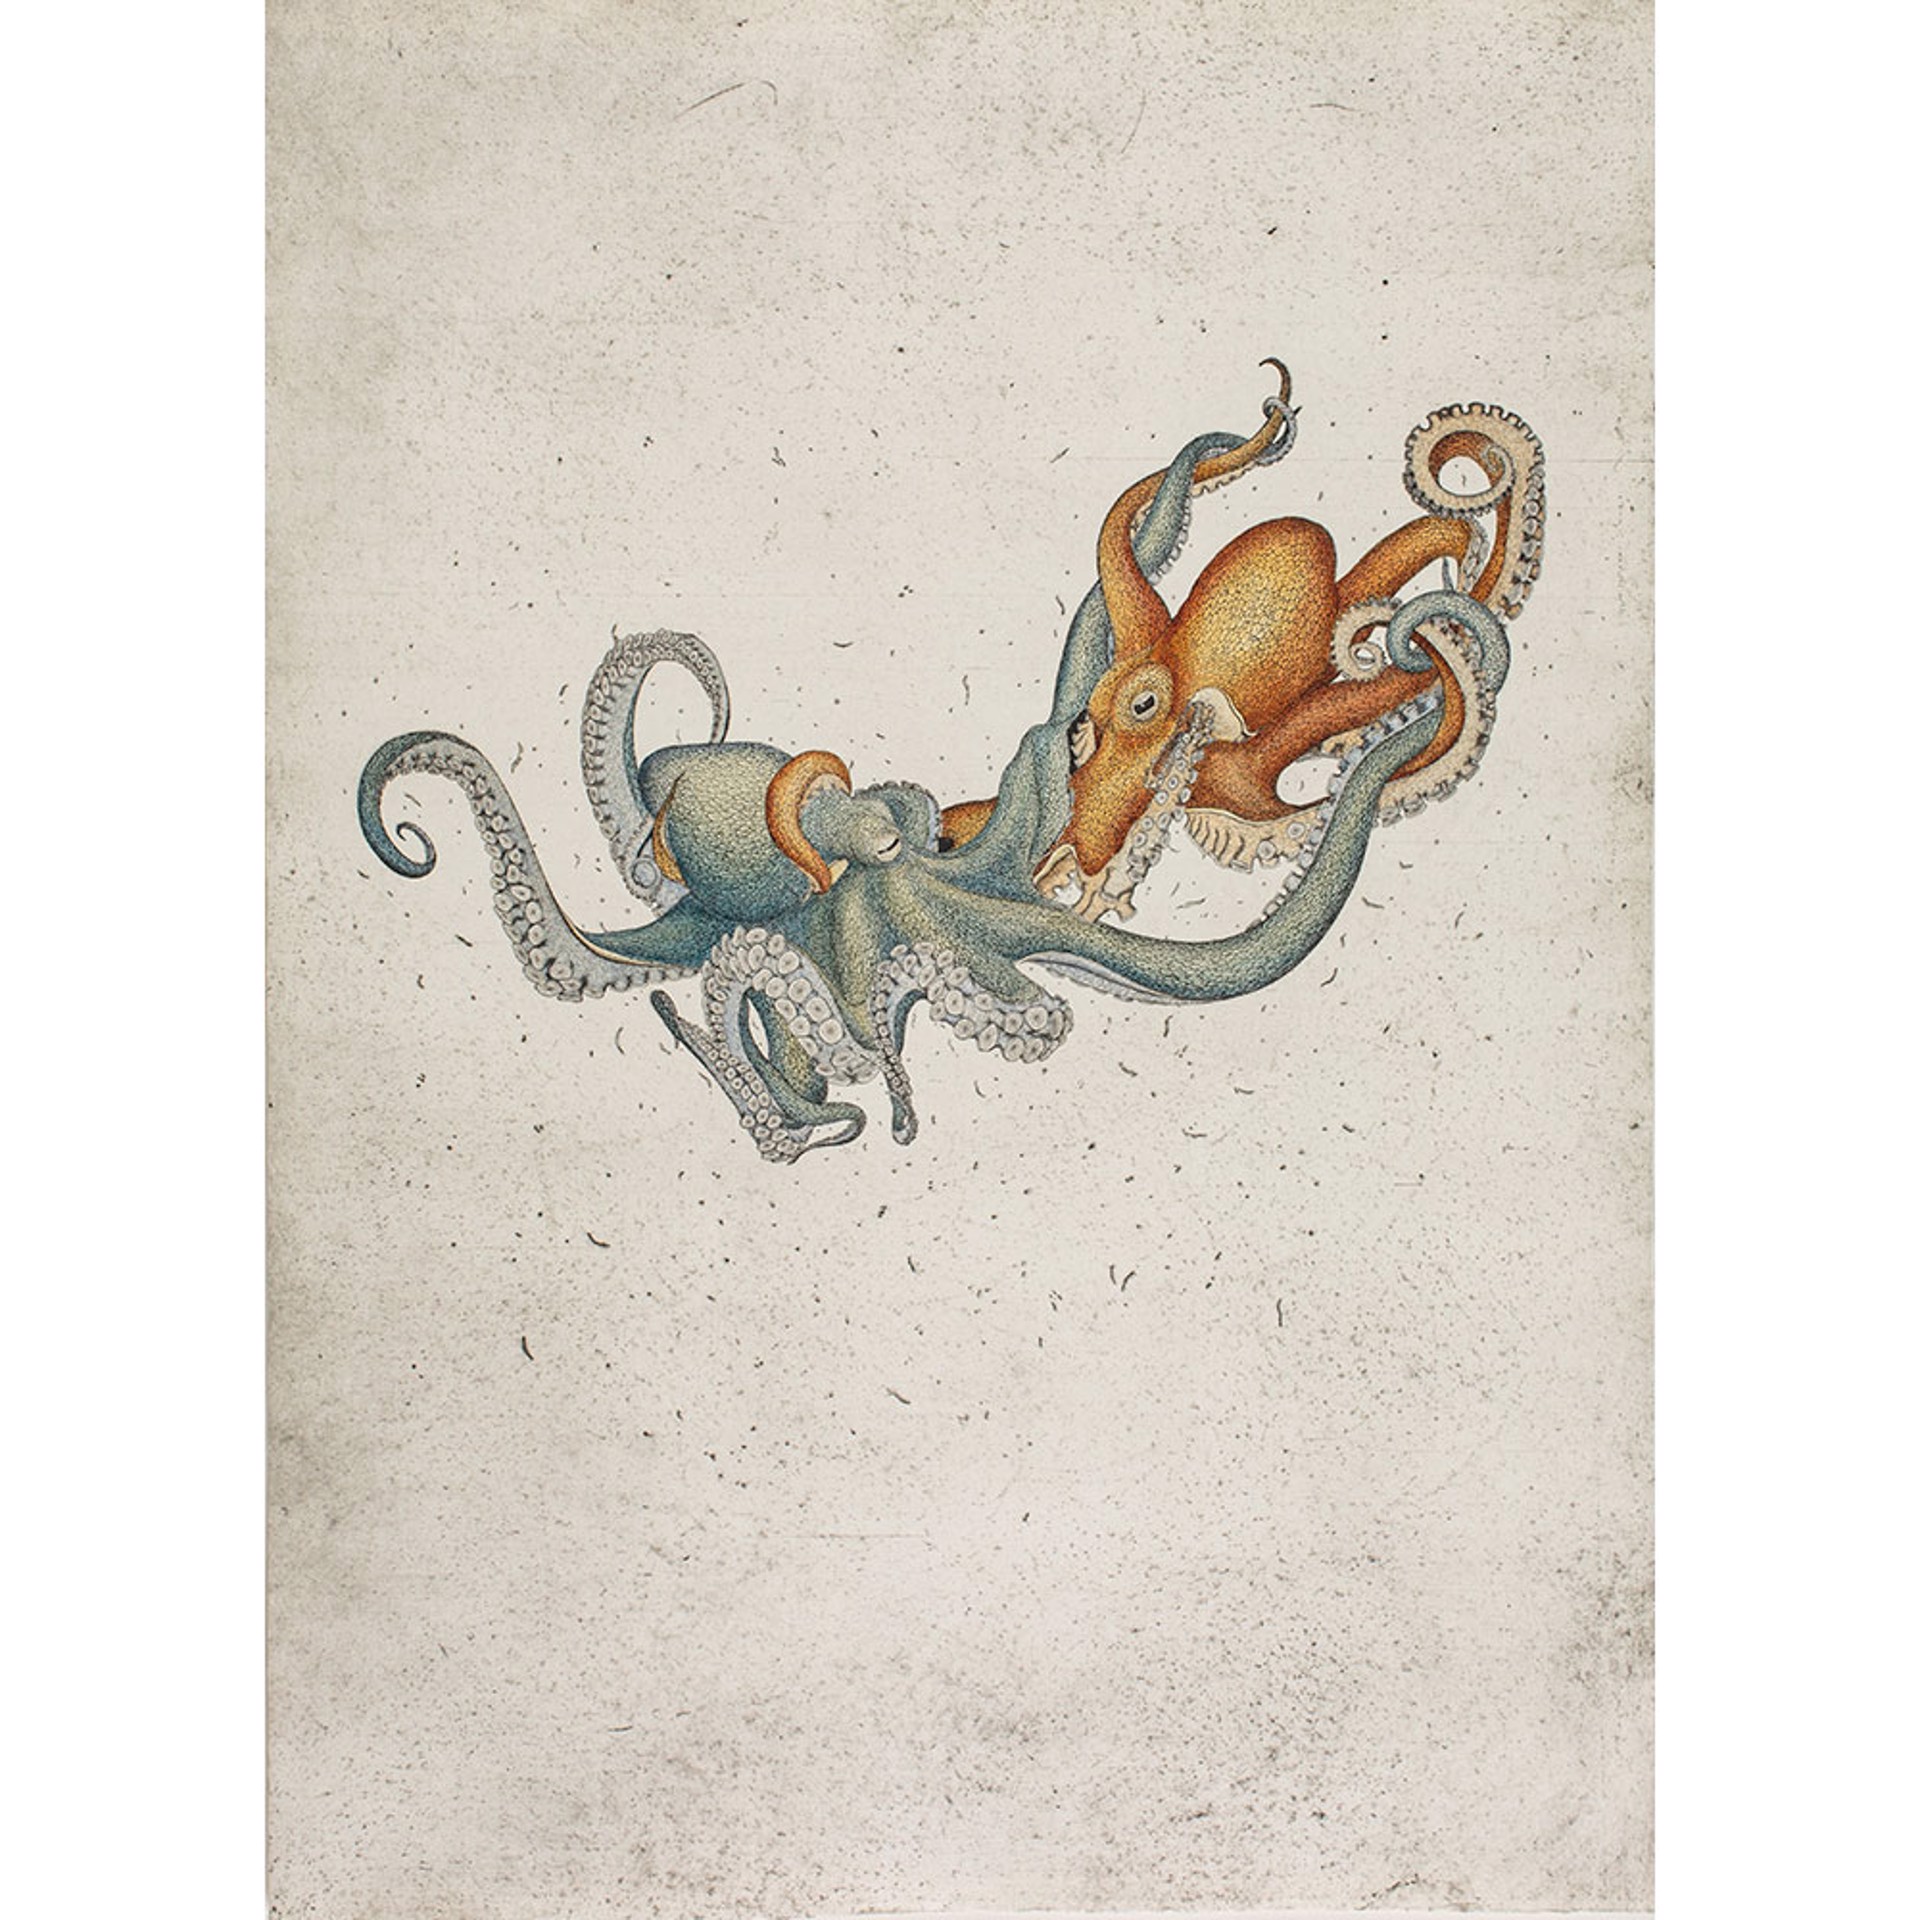 Octopus vulgaris by Briony Morrow-Cribbs